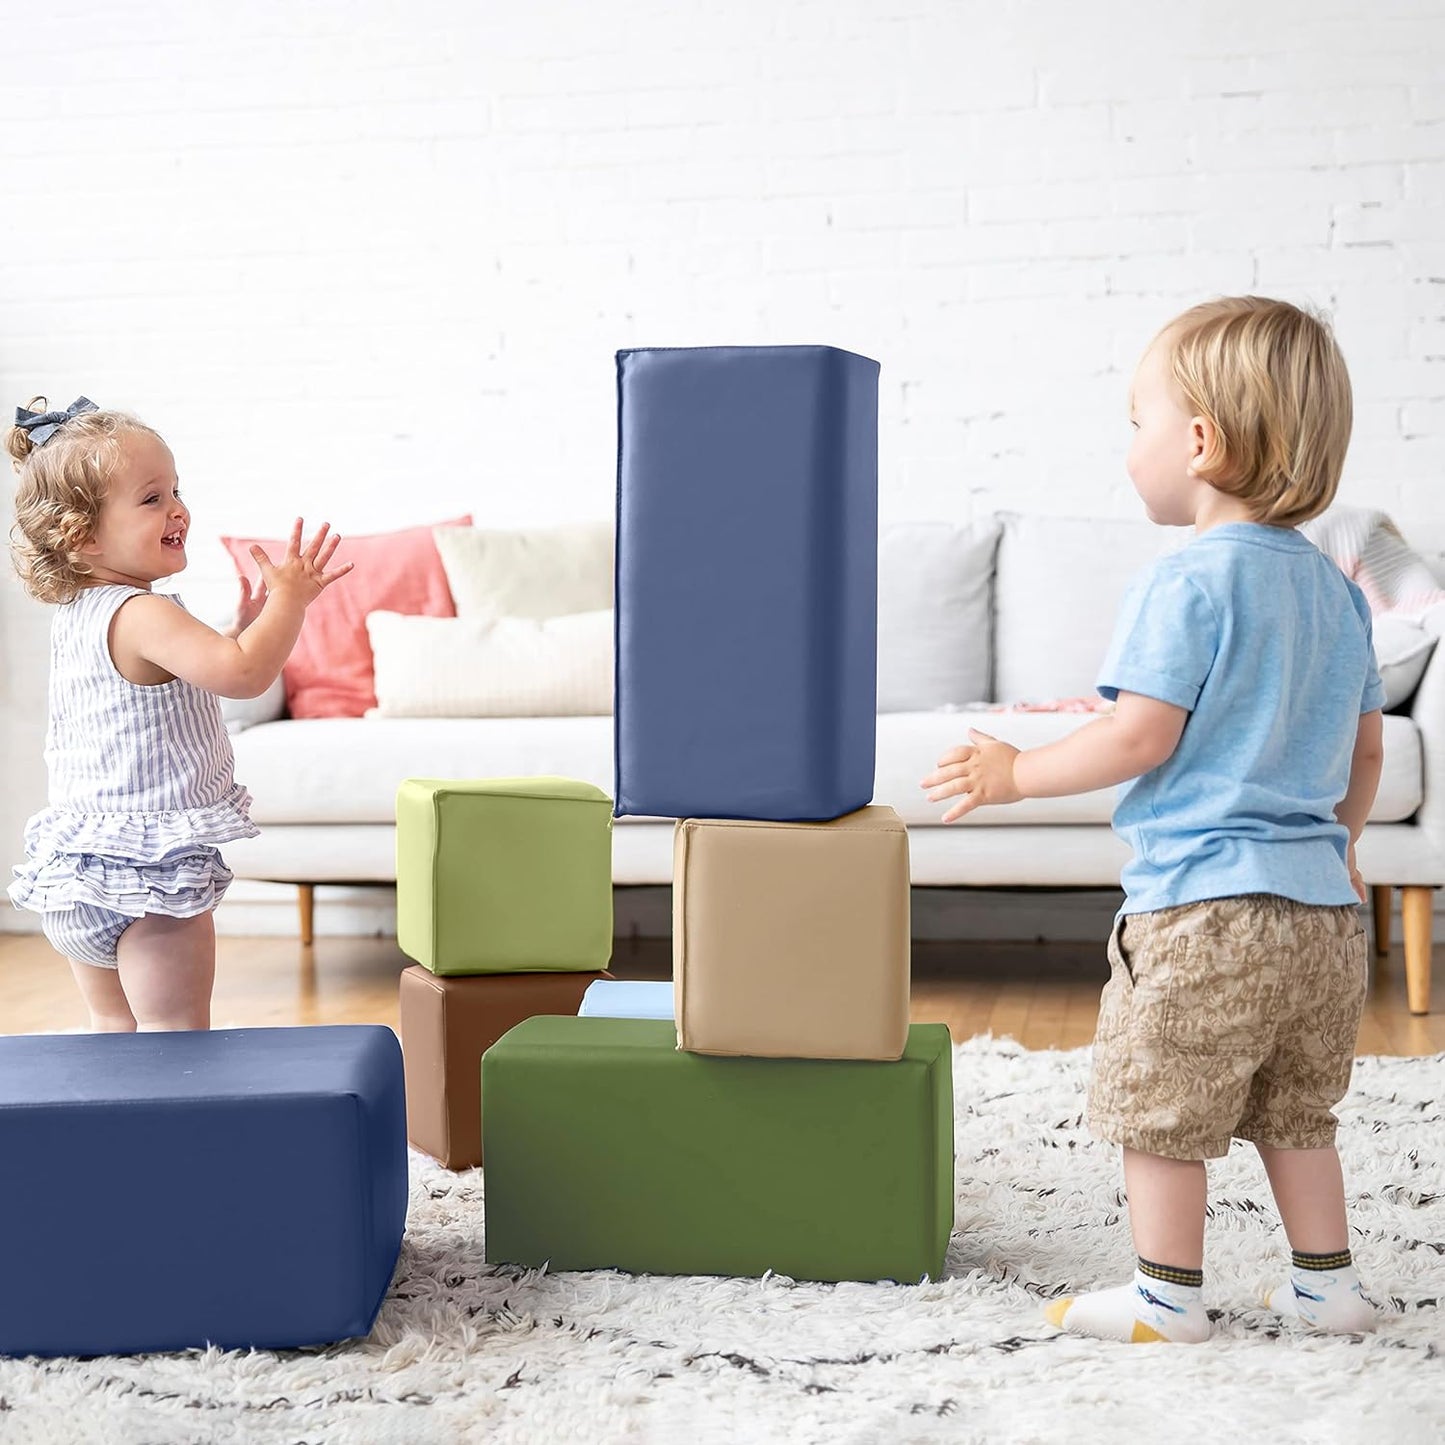 Softy Play Toddler Foam Building Blocks Set of 7件套裝 幼兒泡棉積木